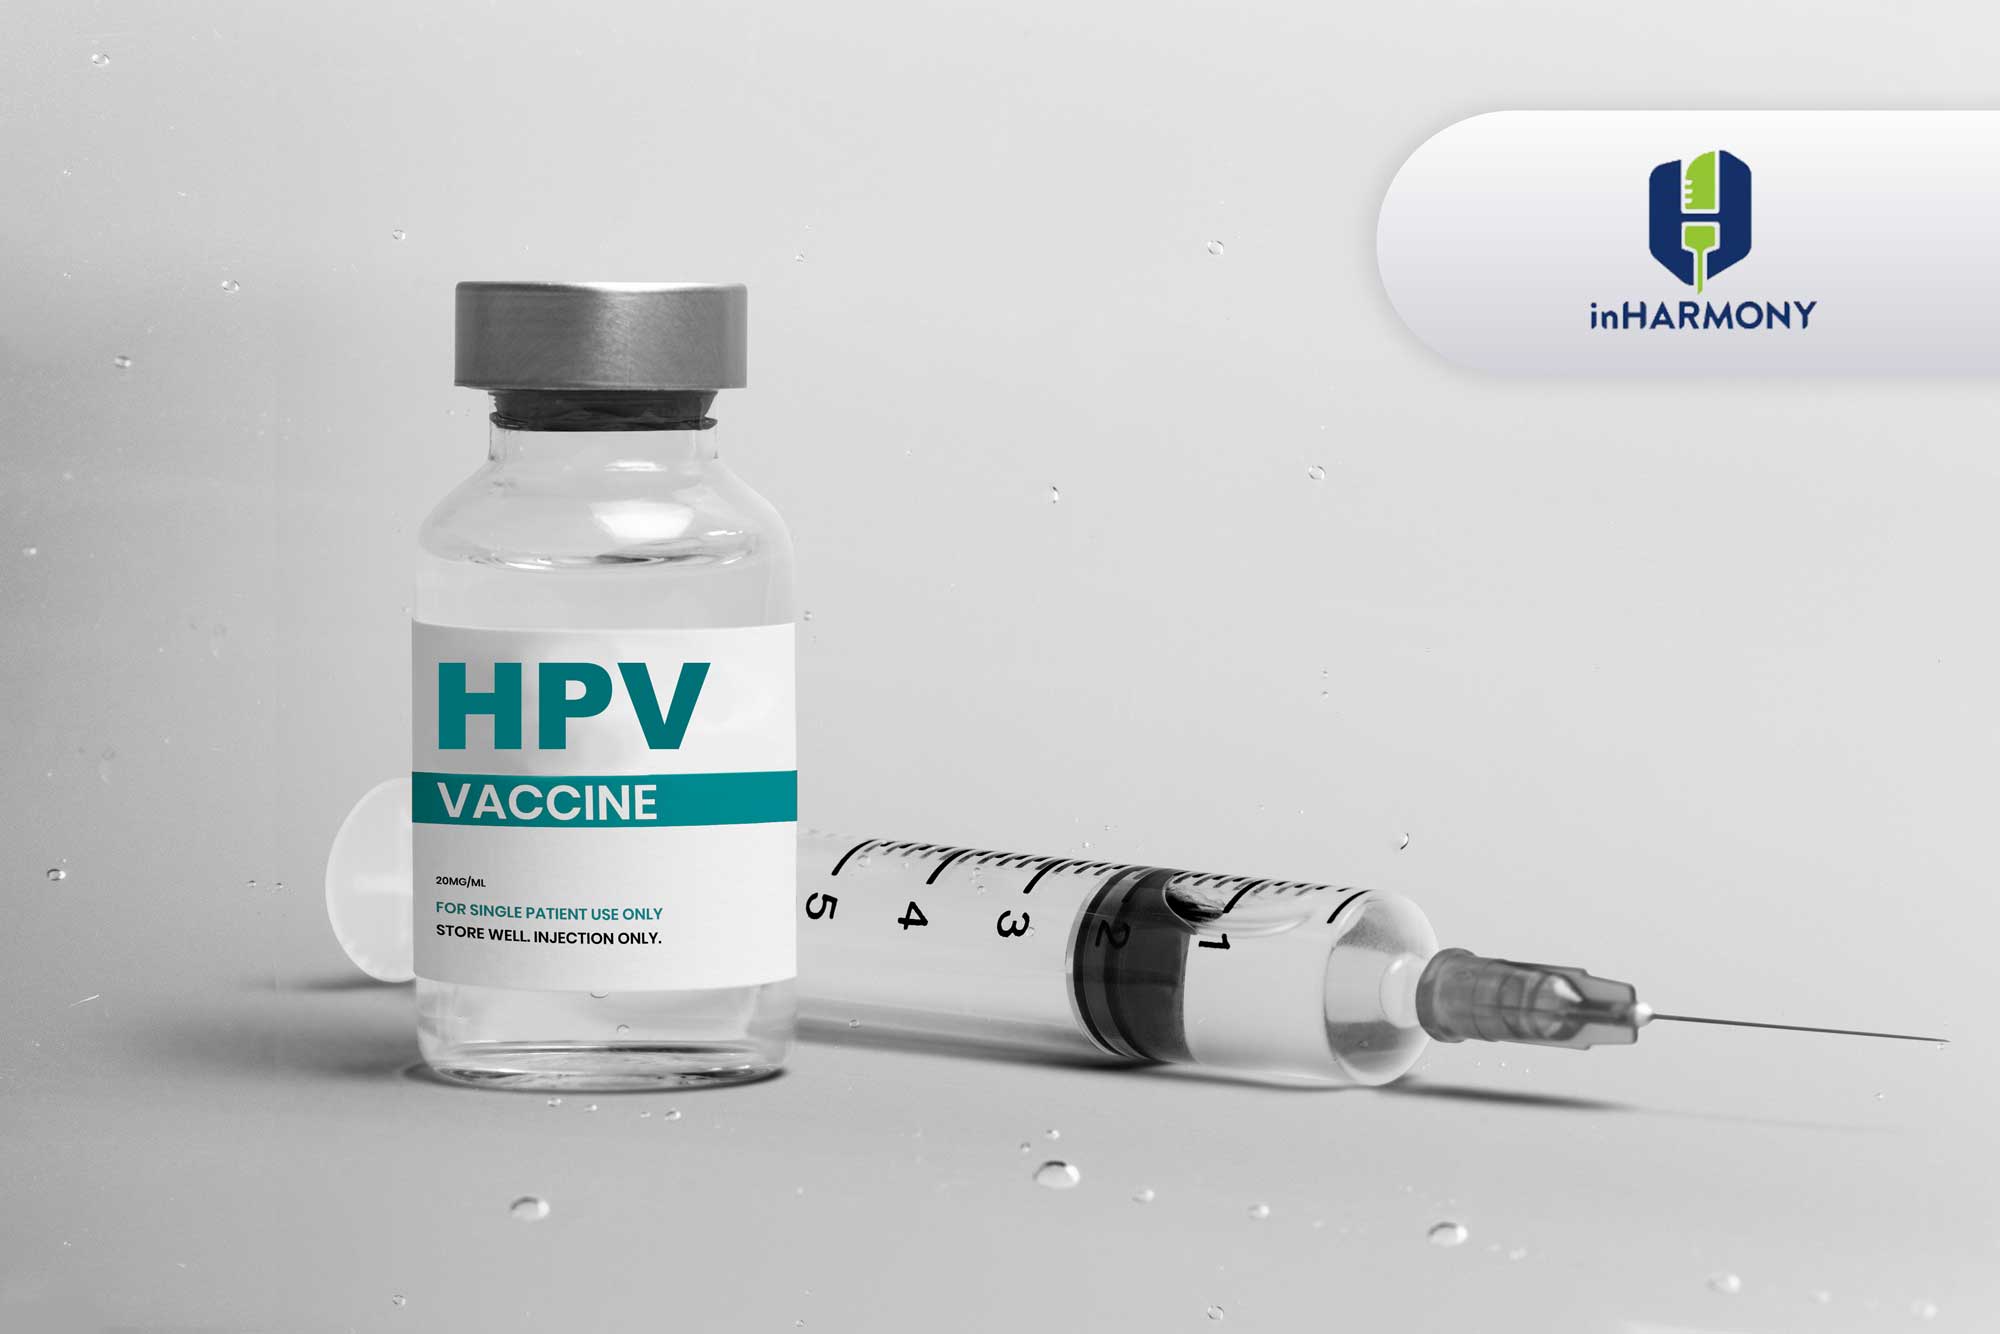 vaksin-hpv-inharmony_1690879795.jpg